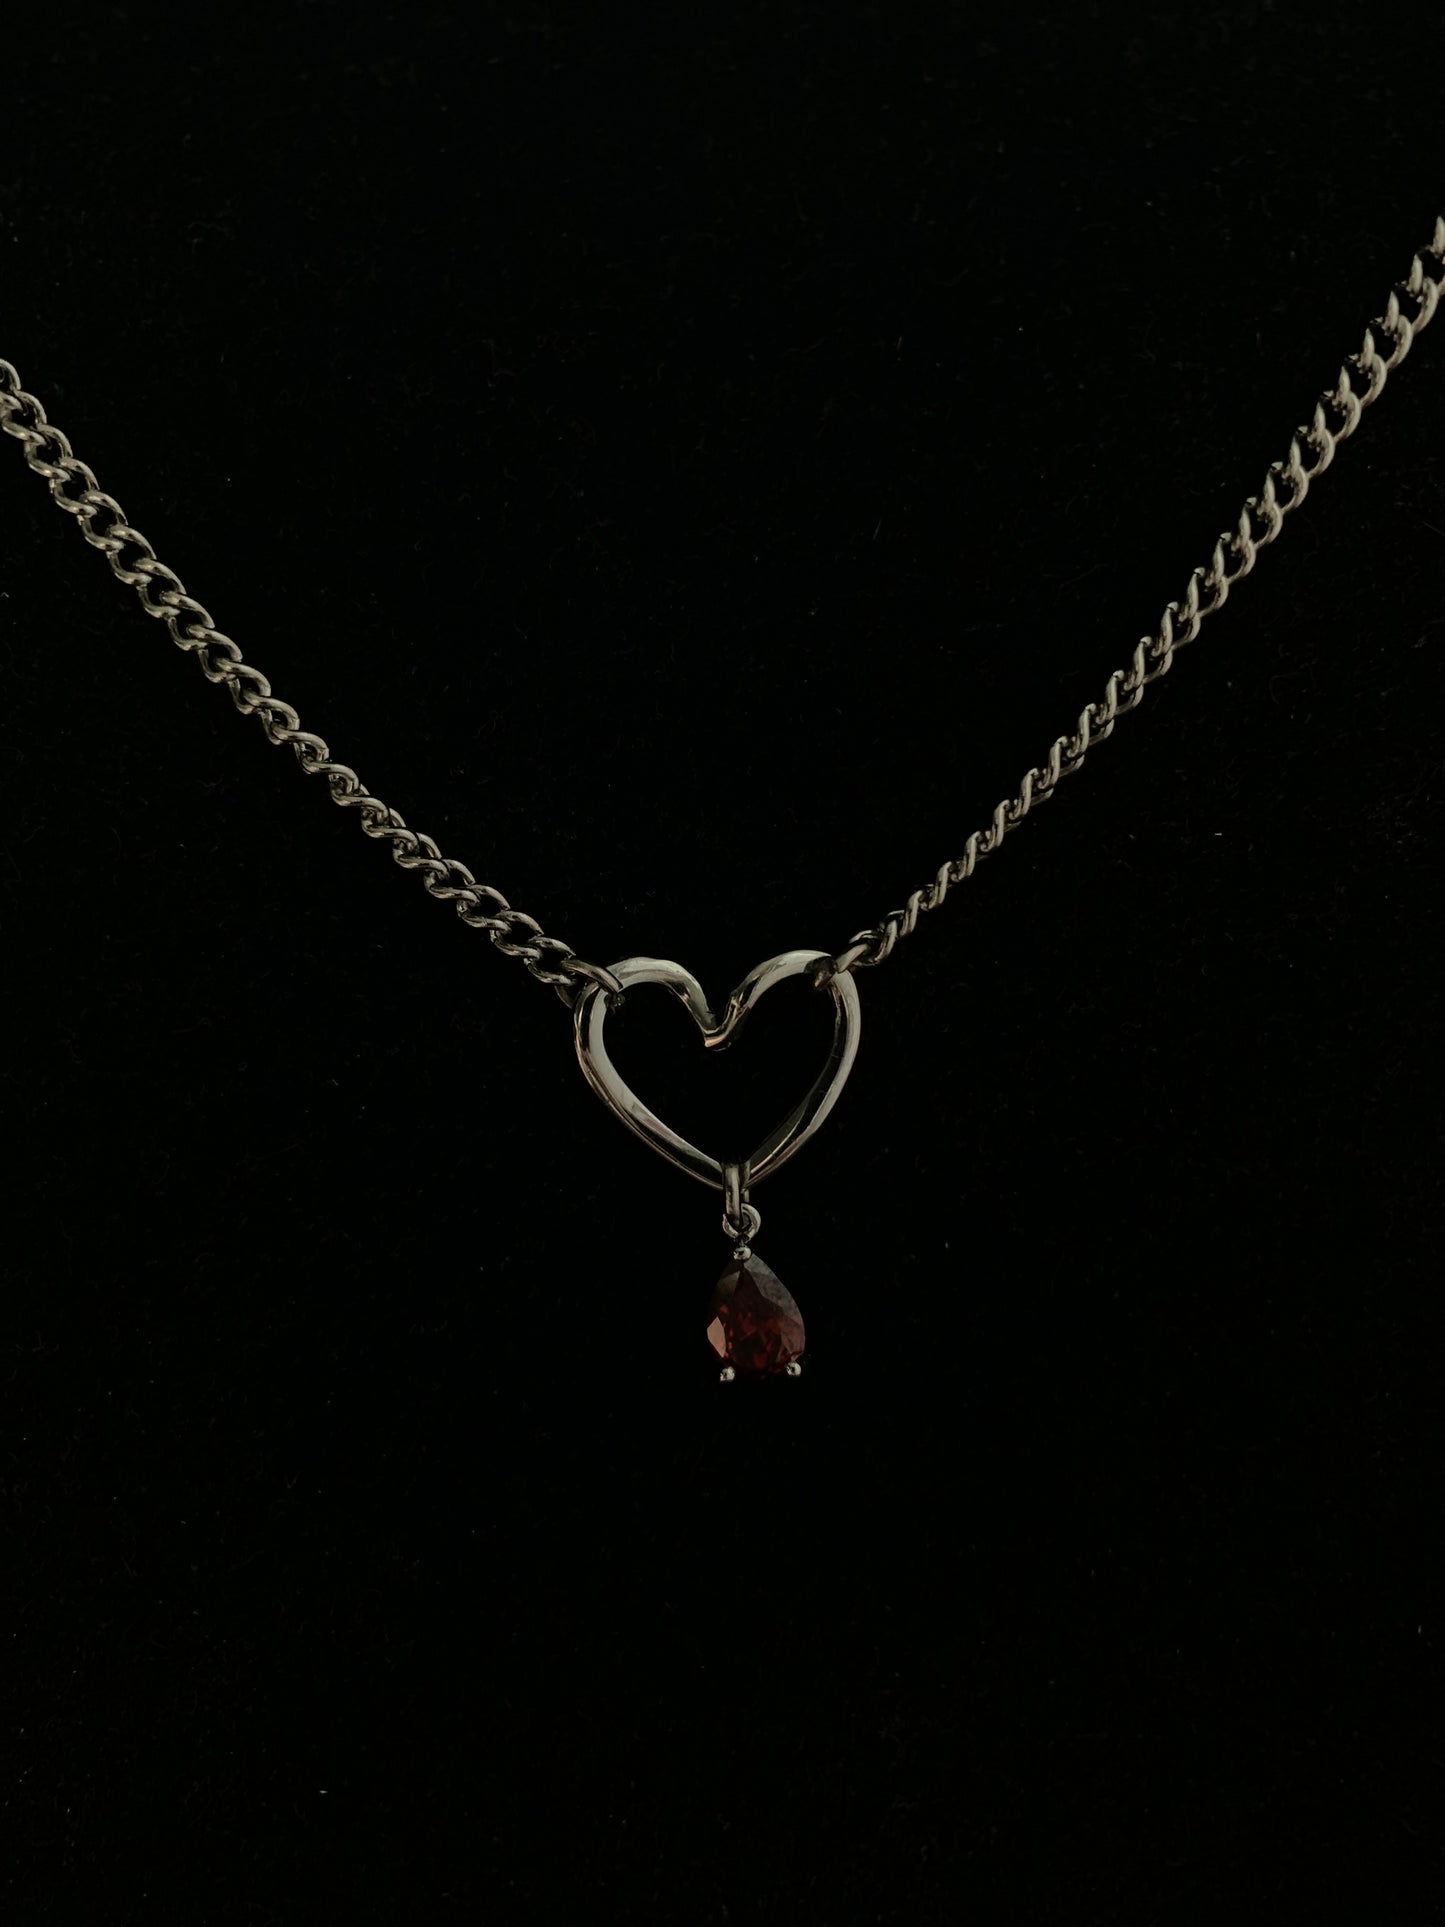 Bleeding Heart necklace